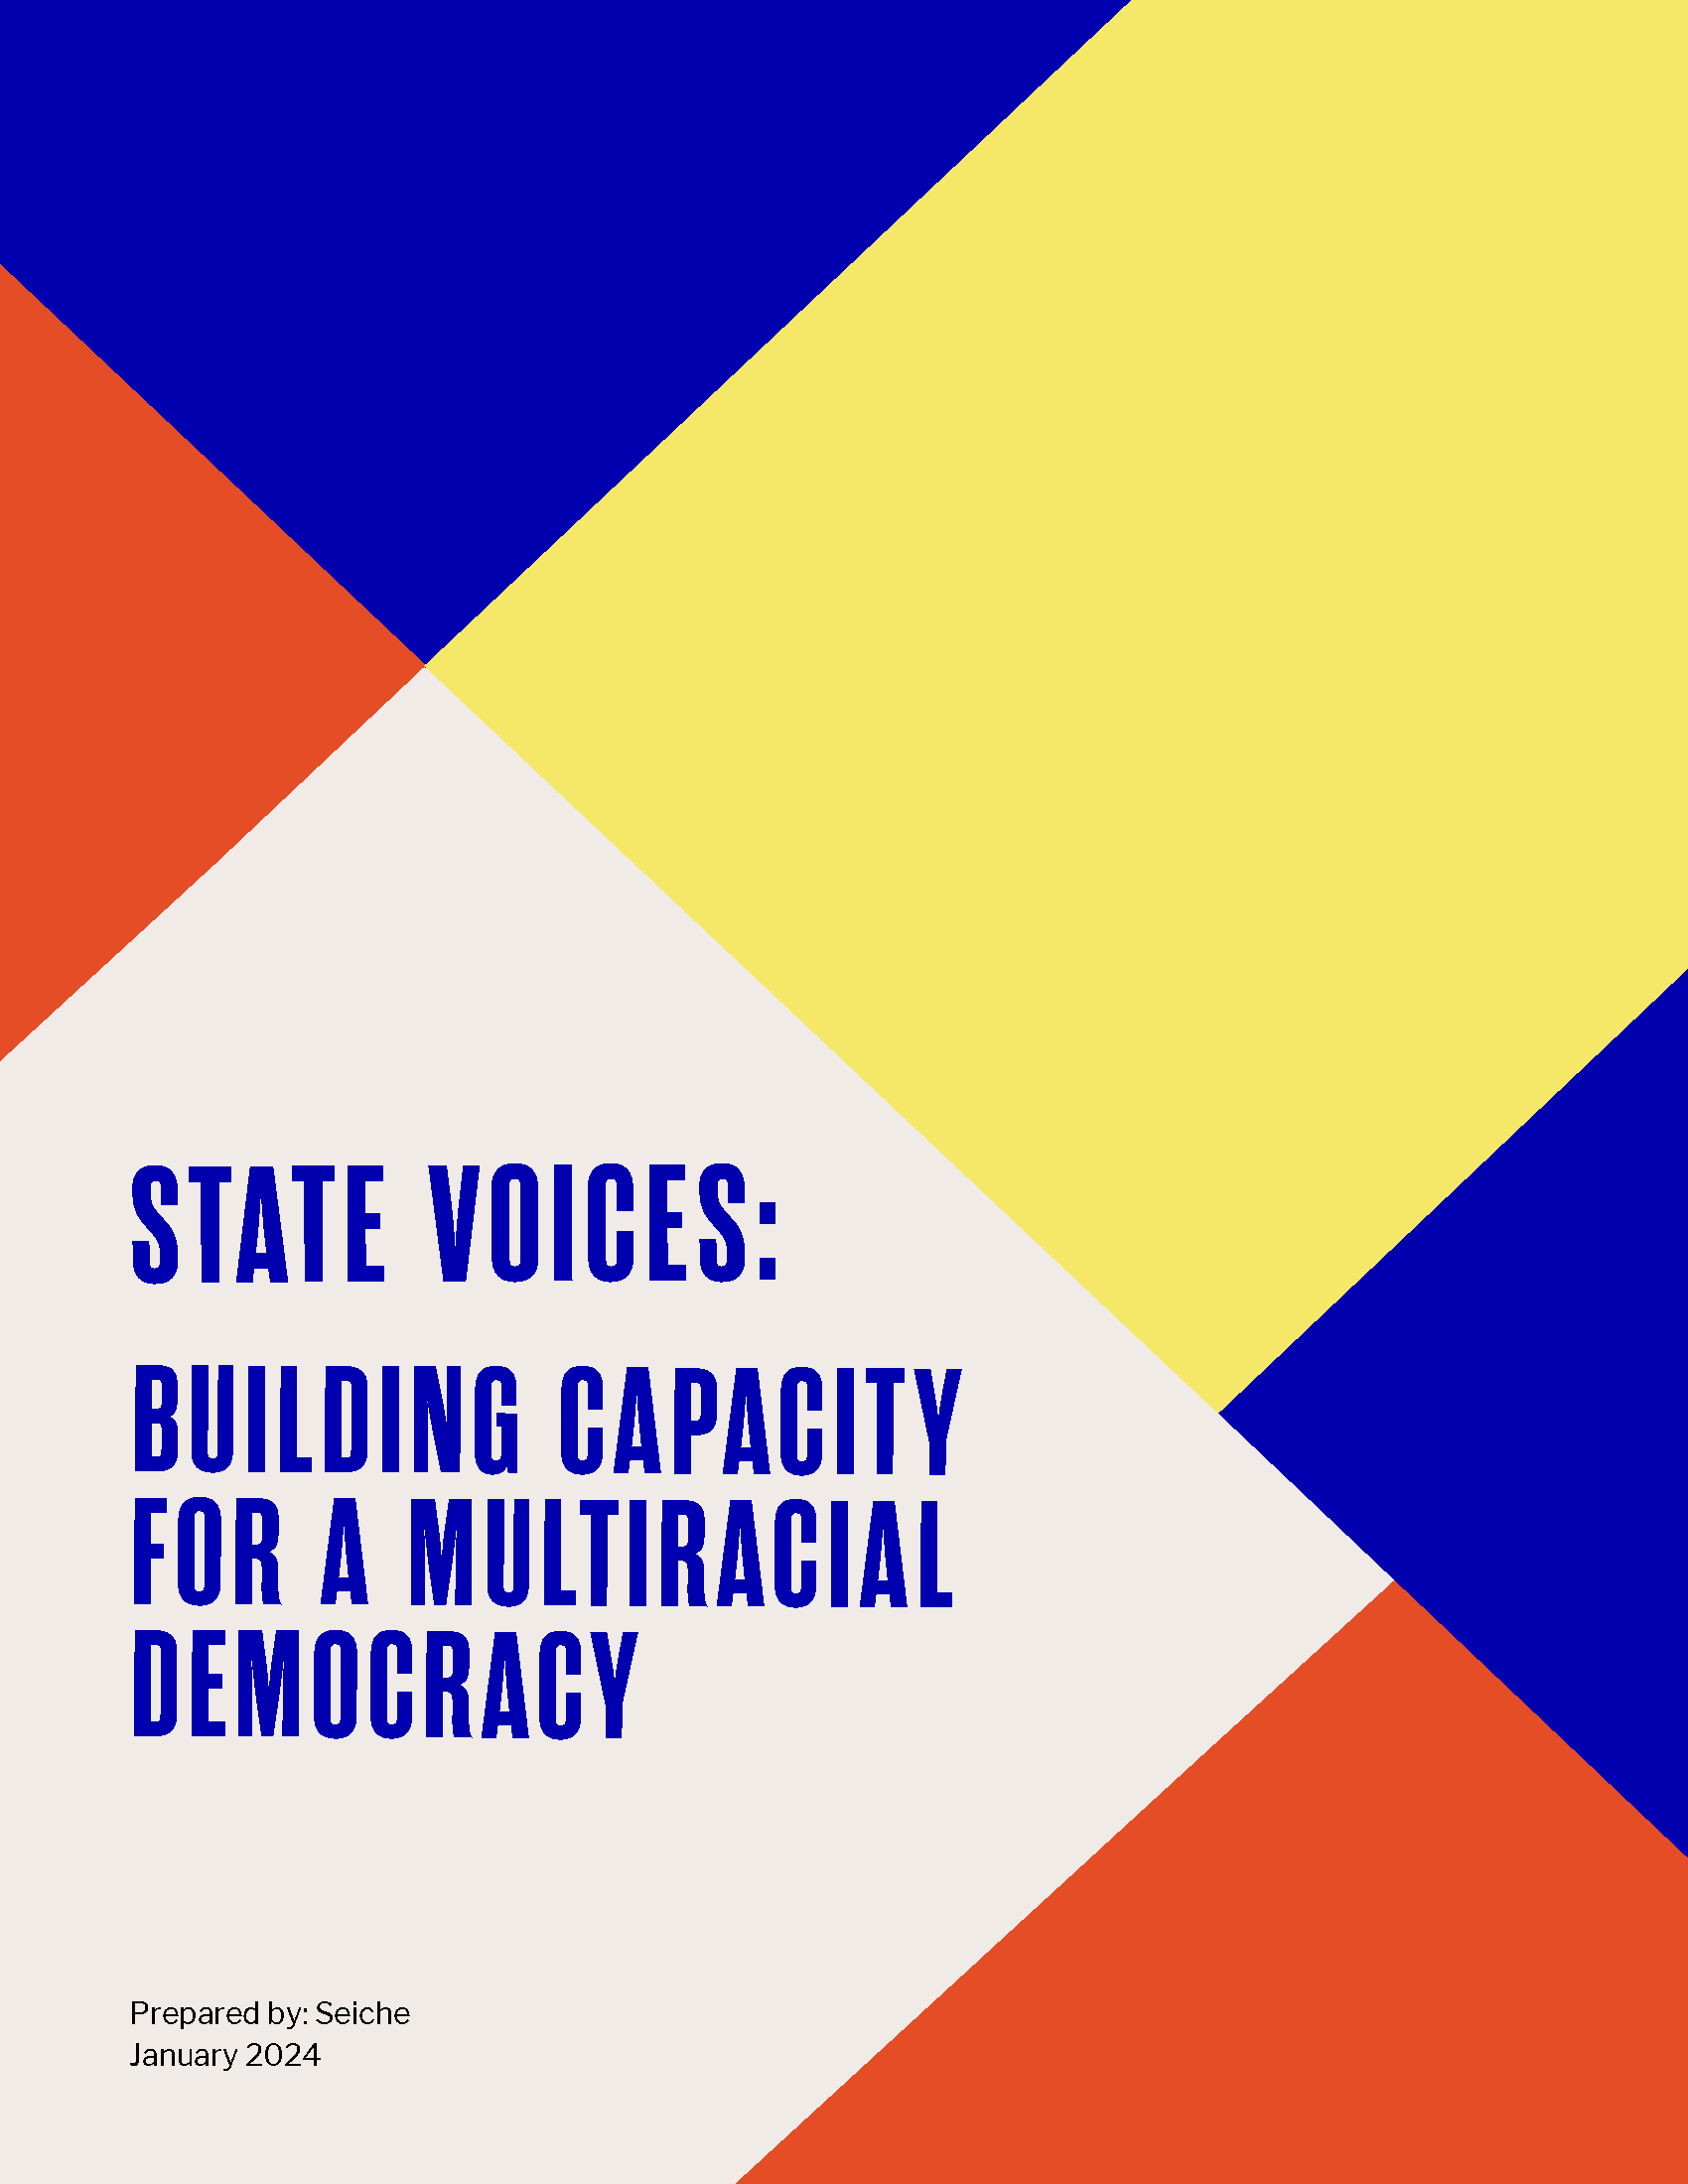 Building capacity for a multiracial democracy